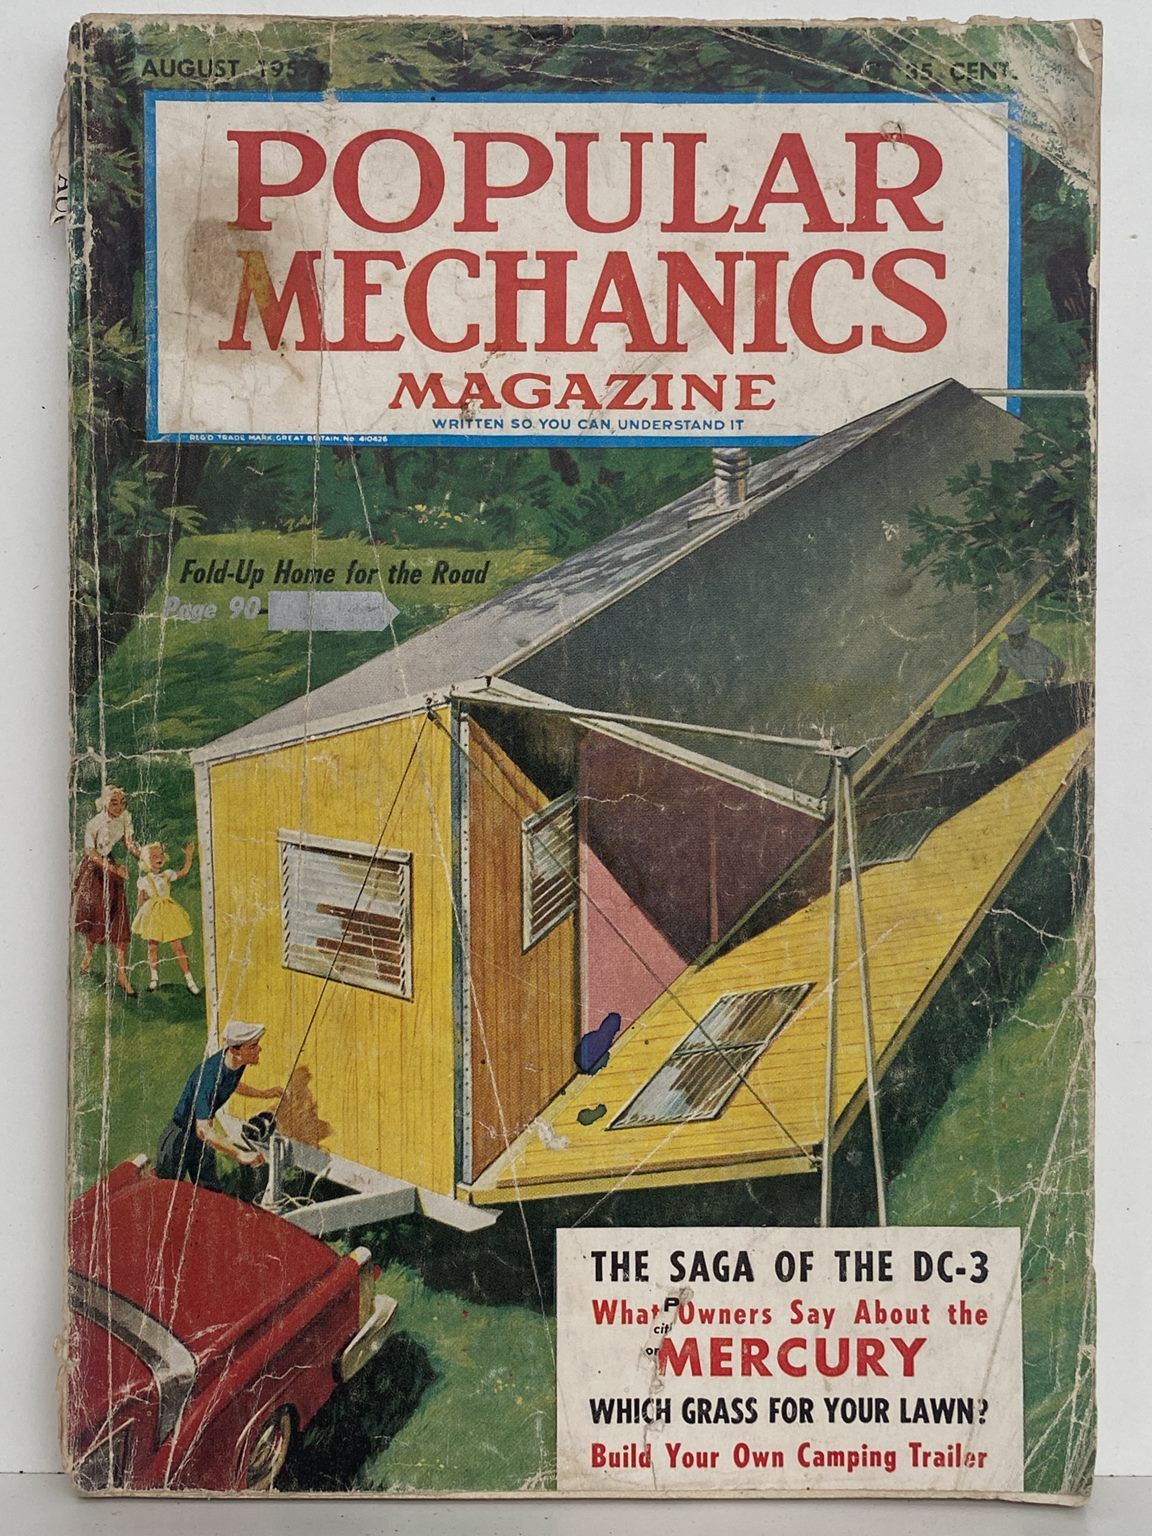 VINTAGE MAGAZINE: Popular Mechanics - Vol. 108, No. 2 - August 1957